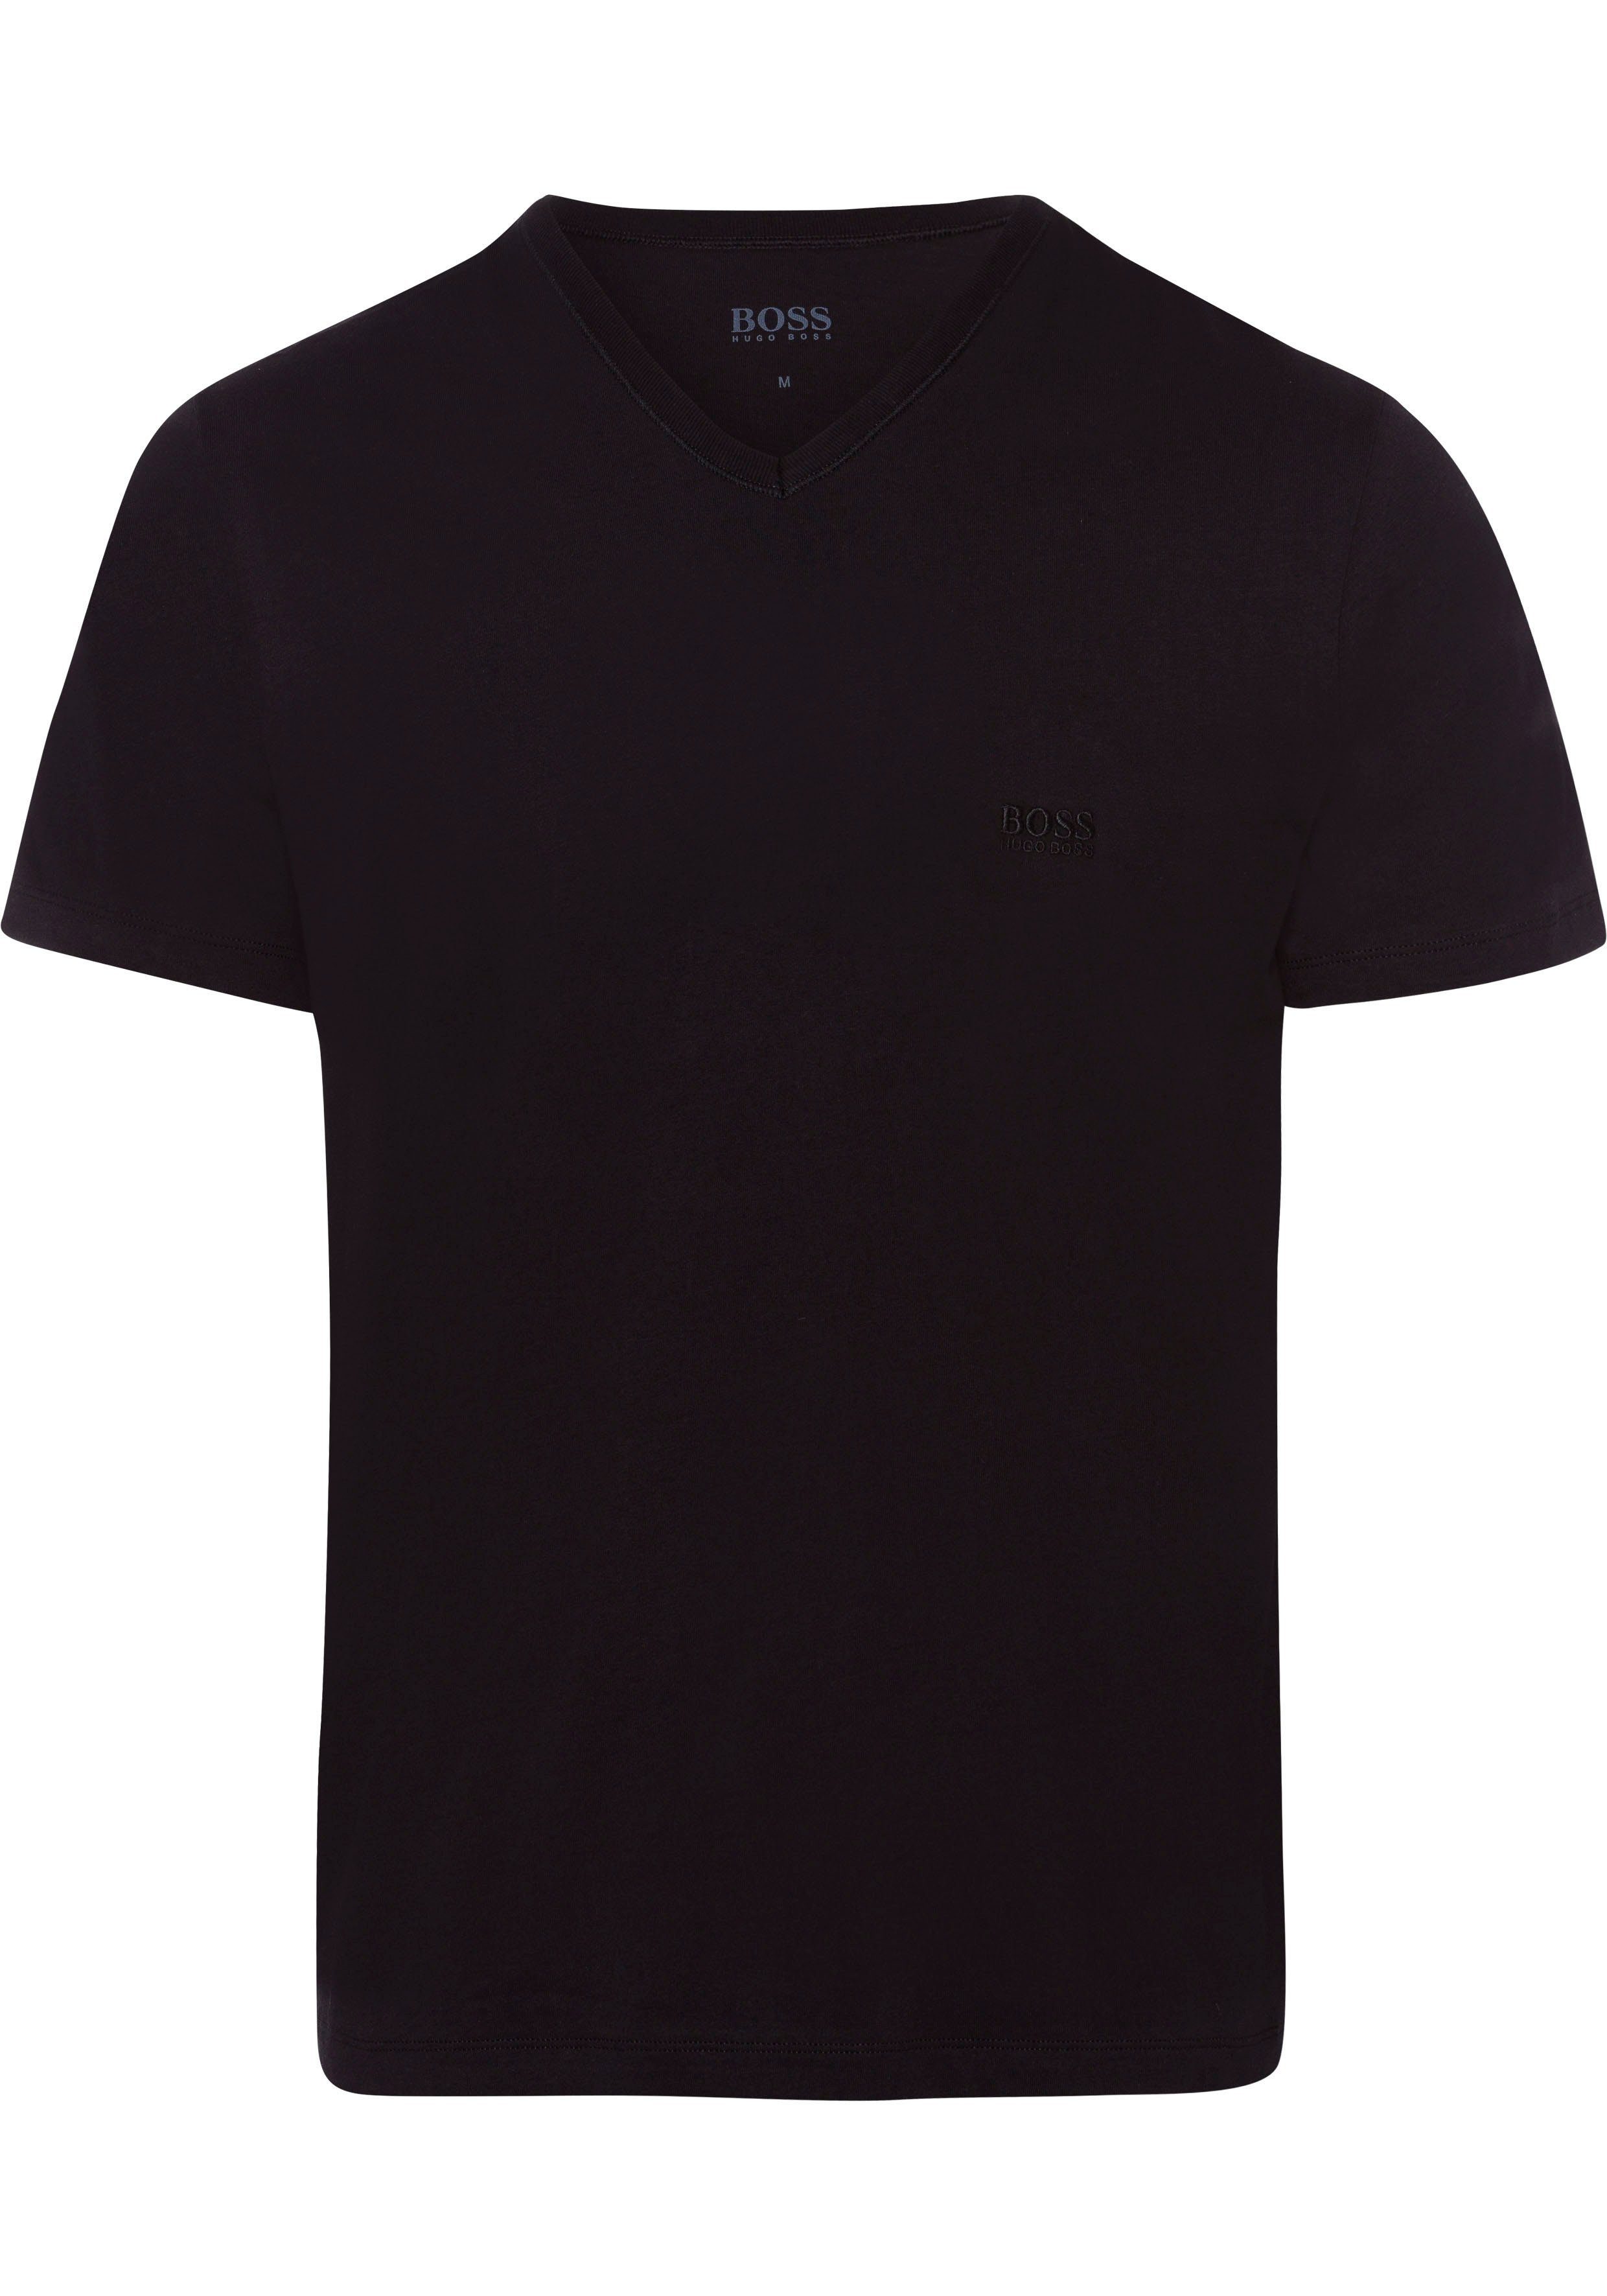 VN 3P BOSS V-Shirt T-Shirt CO (Packung) black